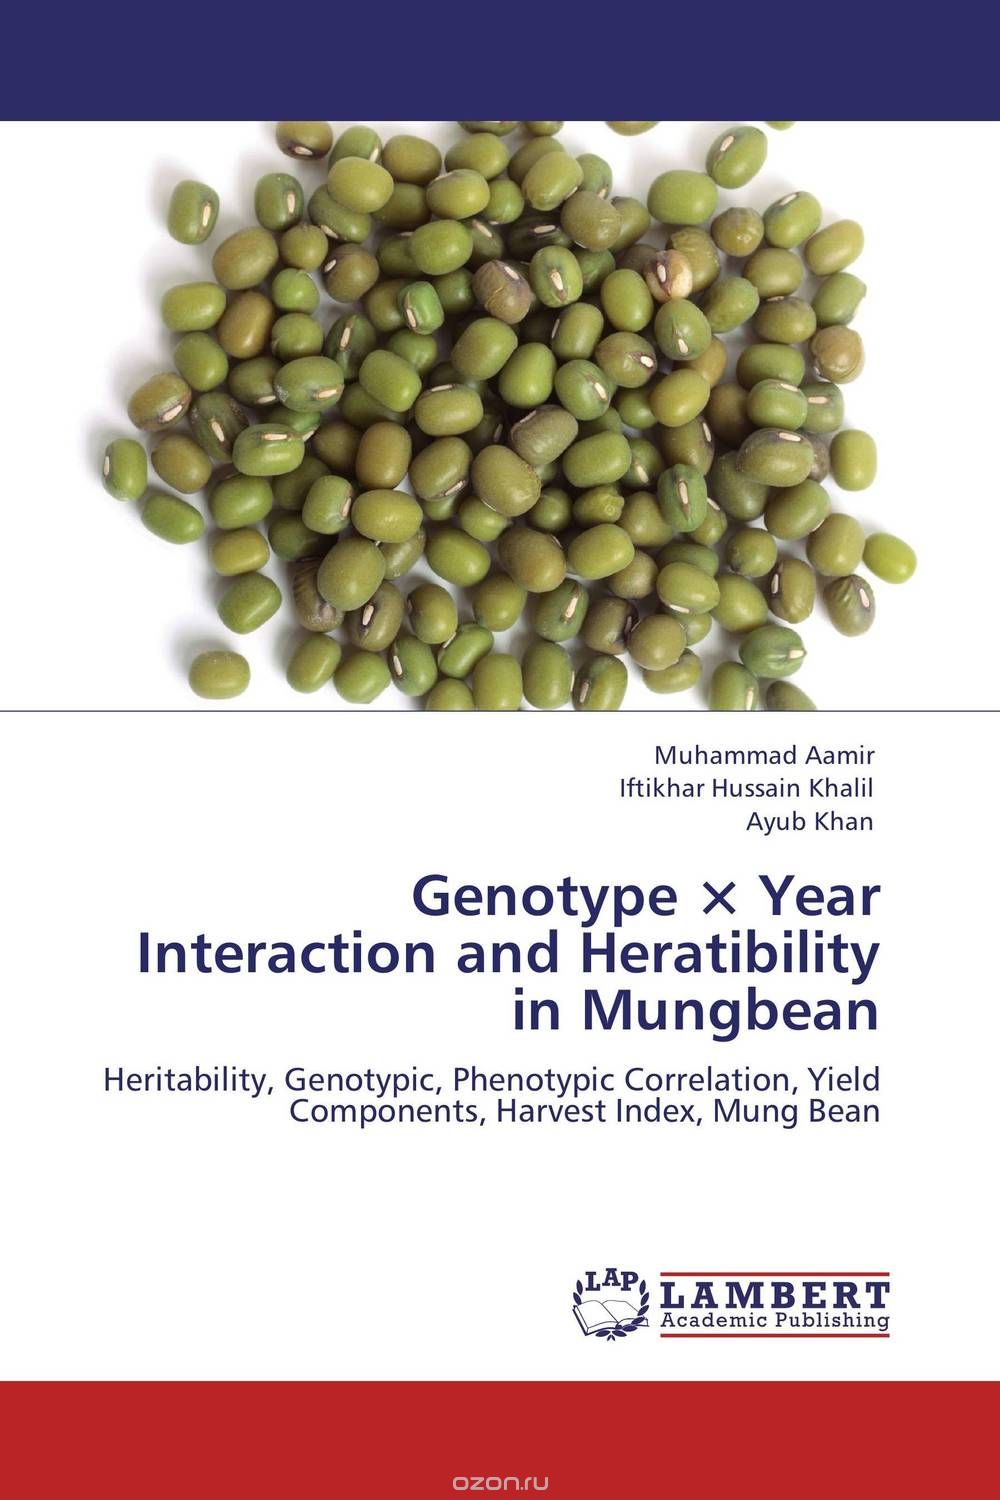 Скачать книгу "Genotype ? Year Interaction and Heratibility in Mungbean"